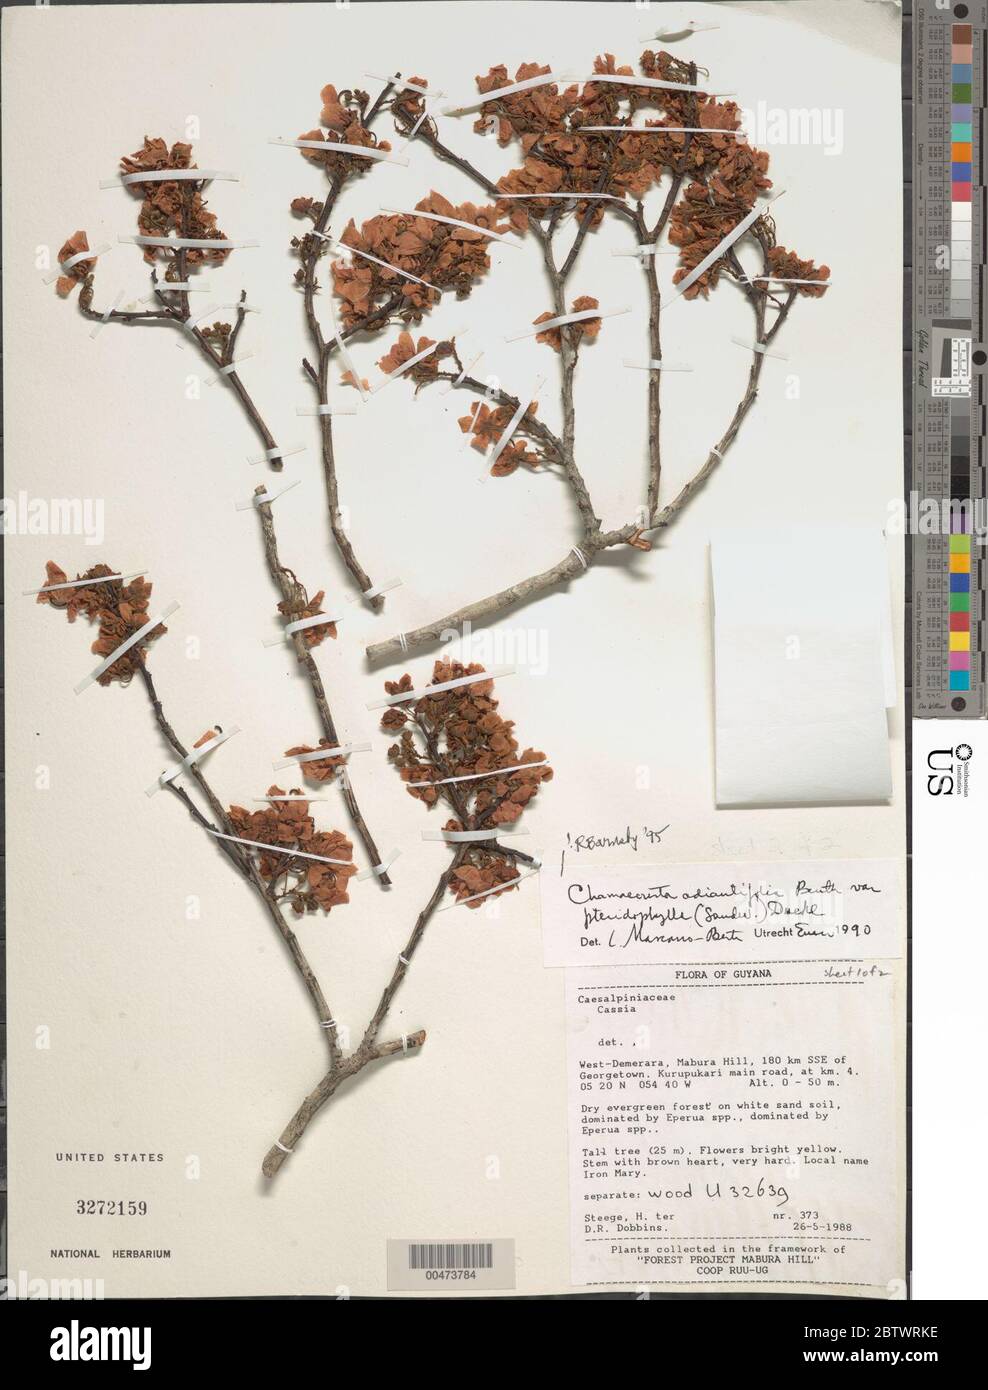 Chamaecrista adiantifolia var pteridophylla Sandwith HS Irwin Barneby. Stock Photo